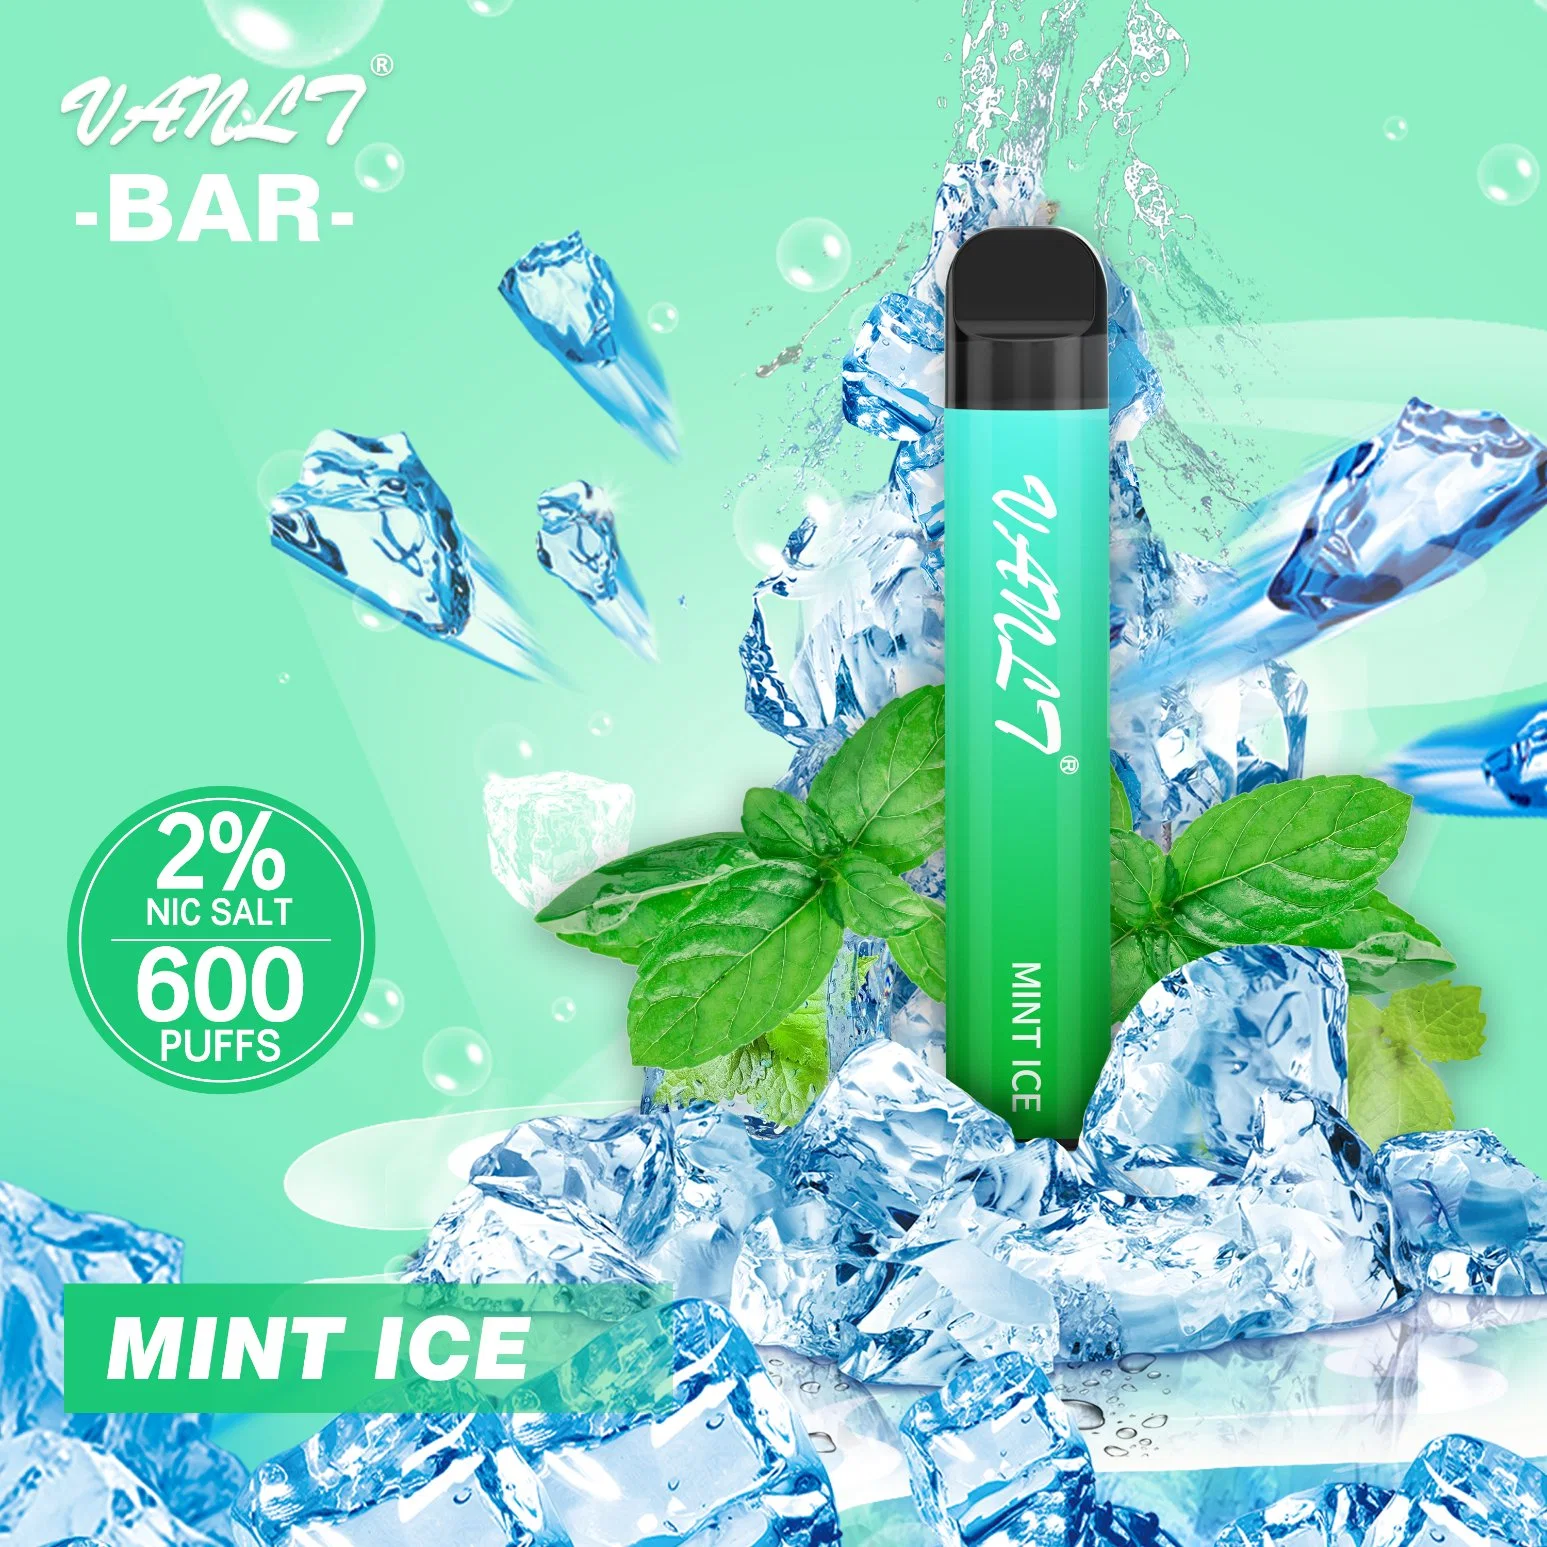 EU Hot 600 Puff Mint Ice Fruit Flavored Disposable/Chargeable Vape Vanlt Elf Mini Bar E Cigarette Factory Directly